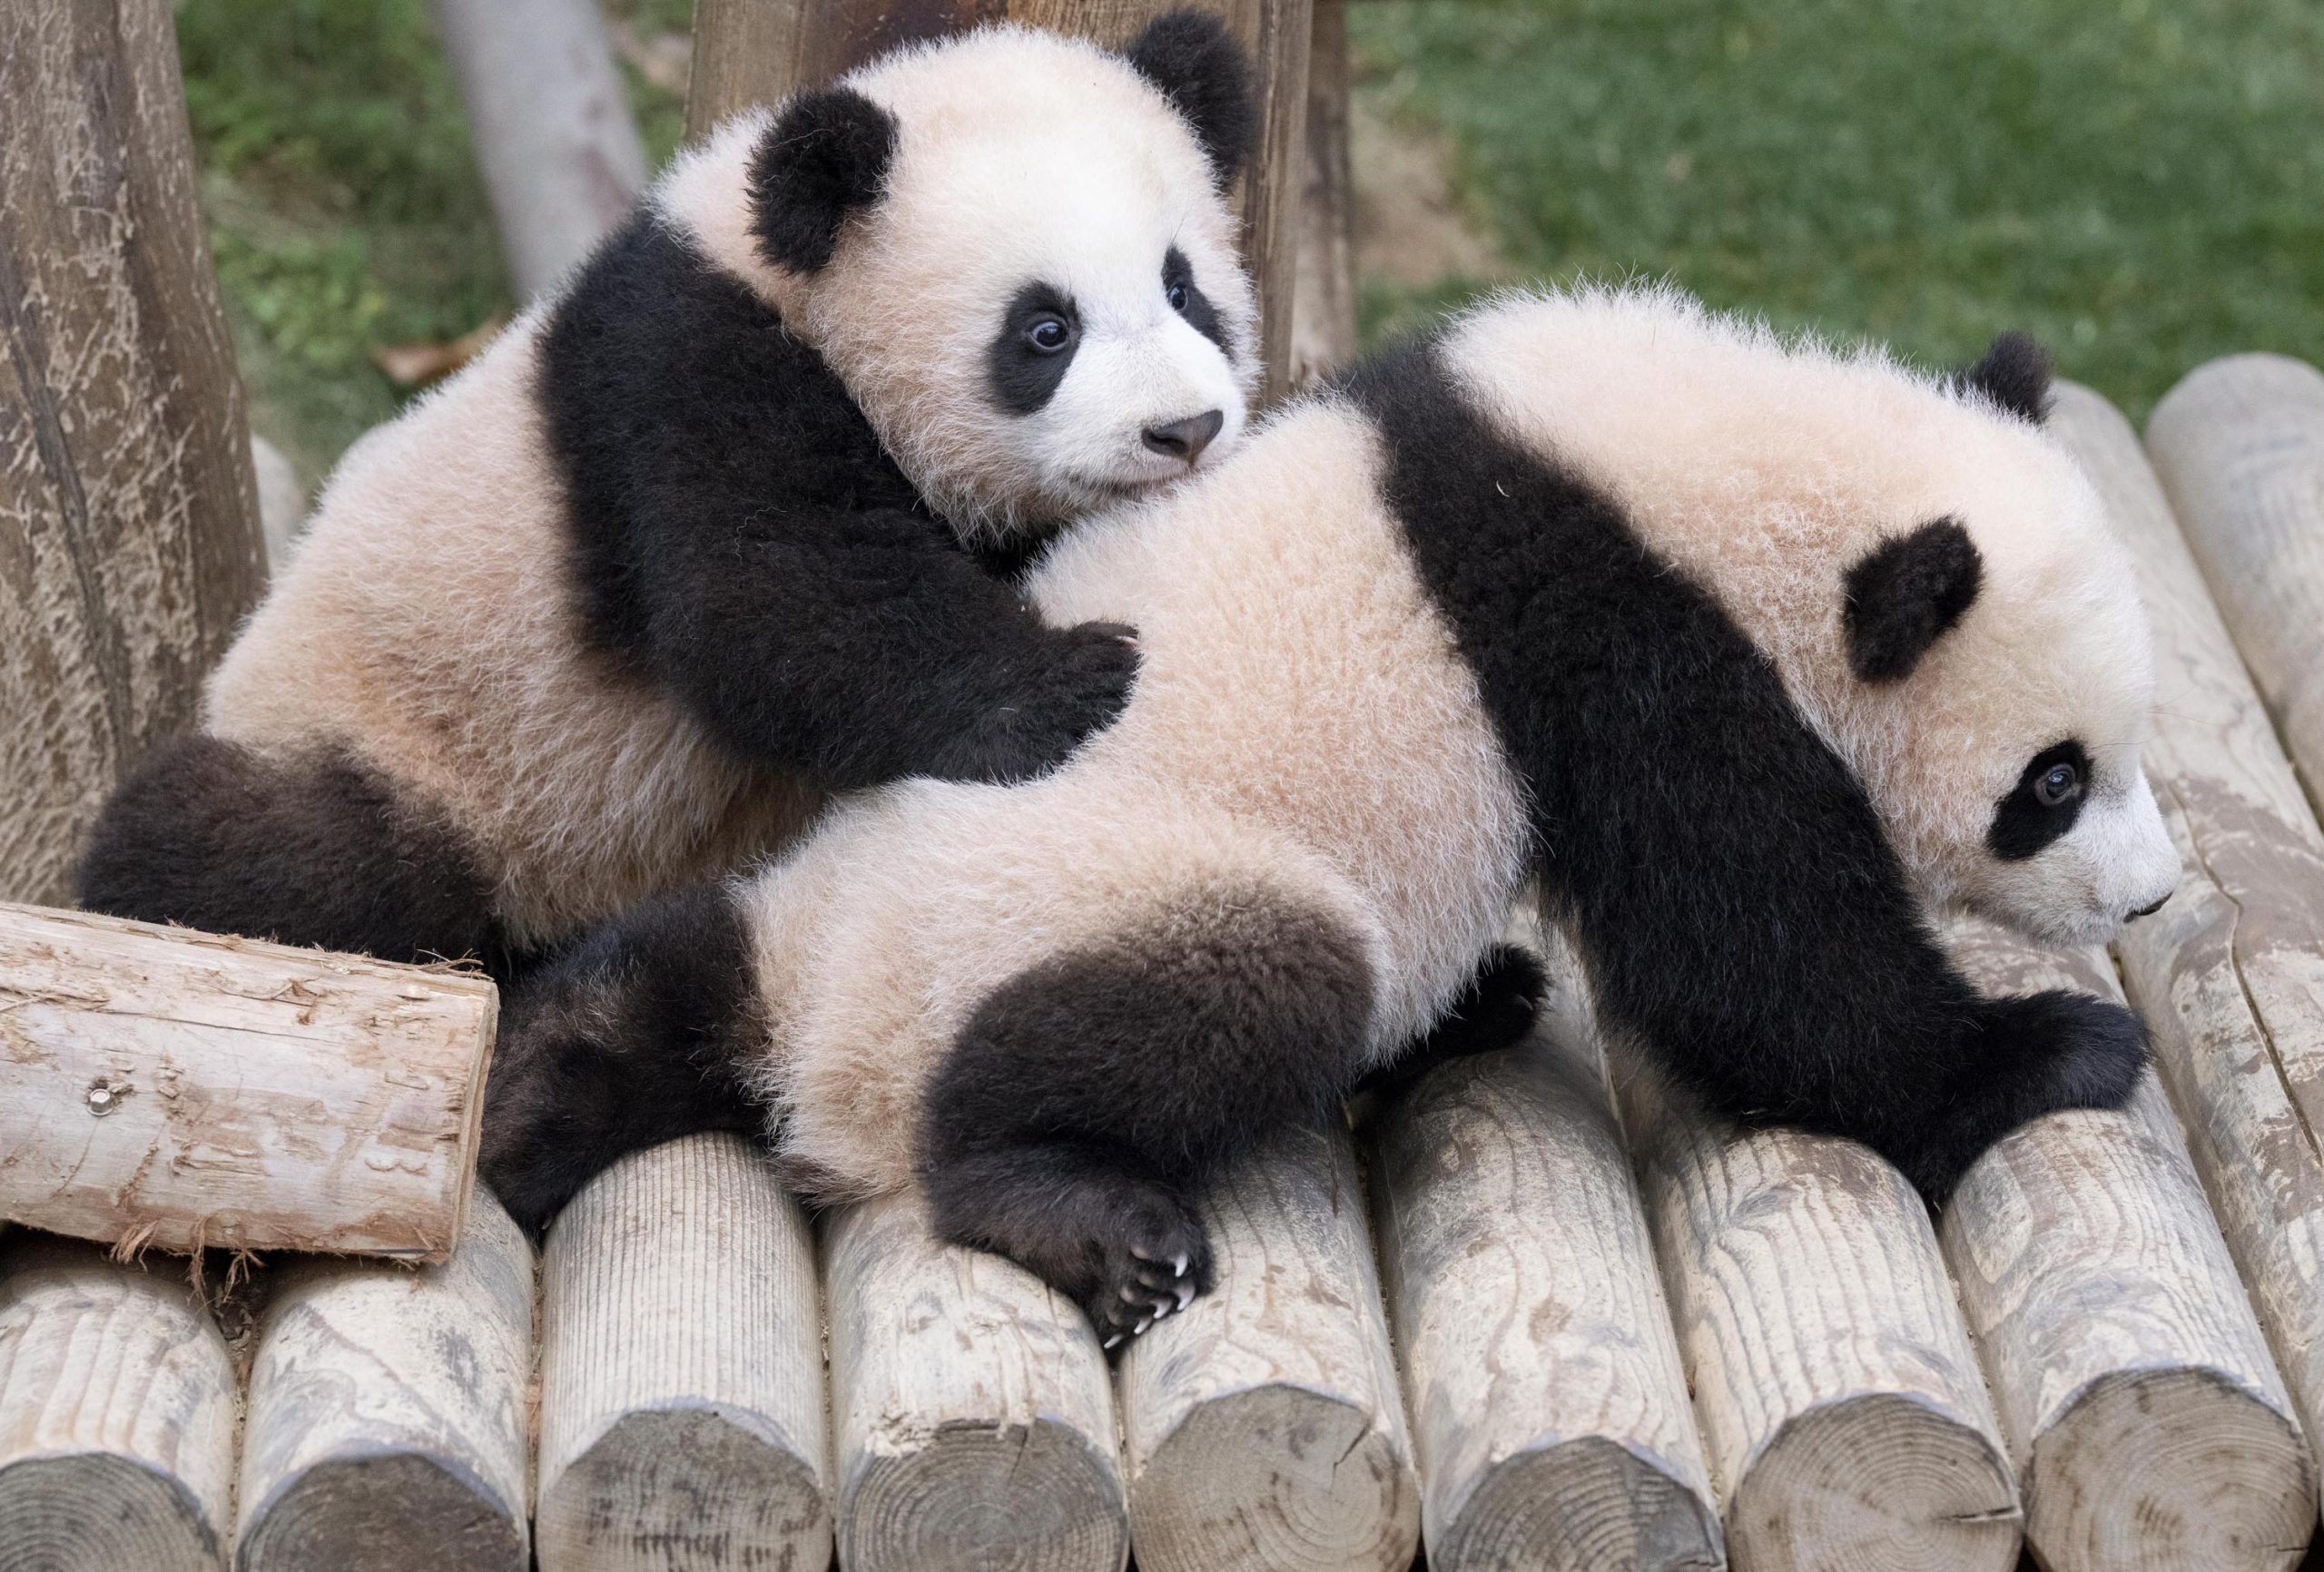 It looks like Lui Bao is trying to get a panda-back ride on Jan. 10 from Hui Bao.